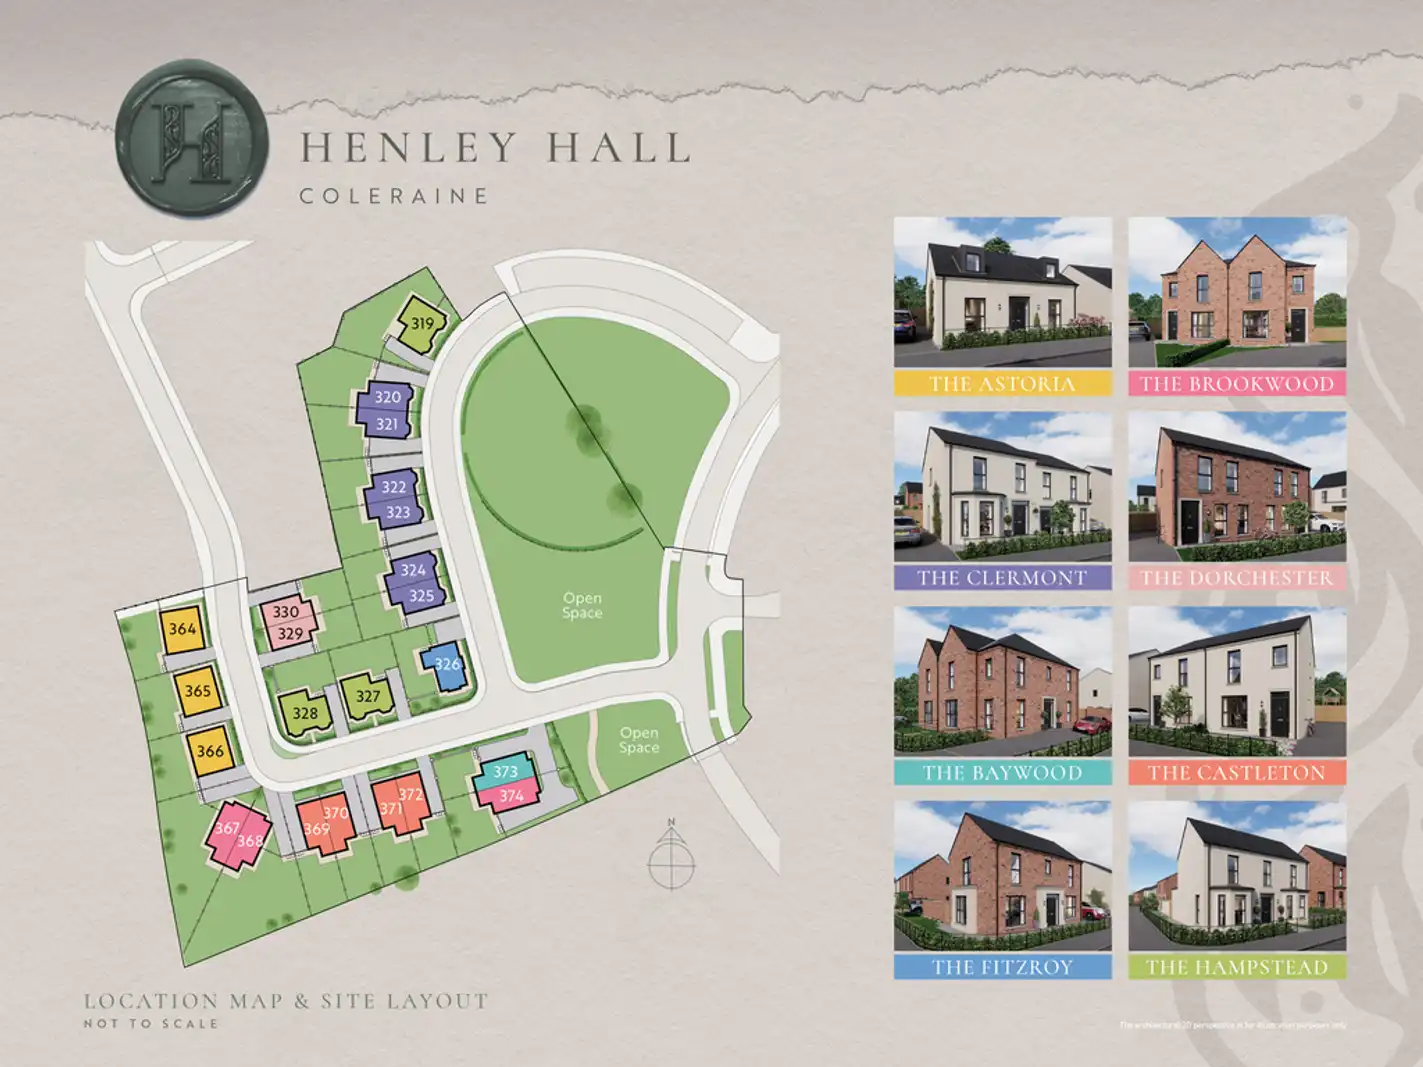 372 Henley Hall, Coleraine